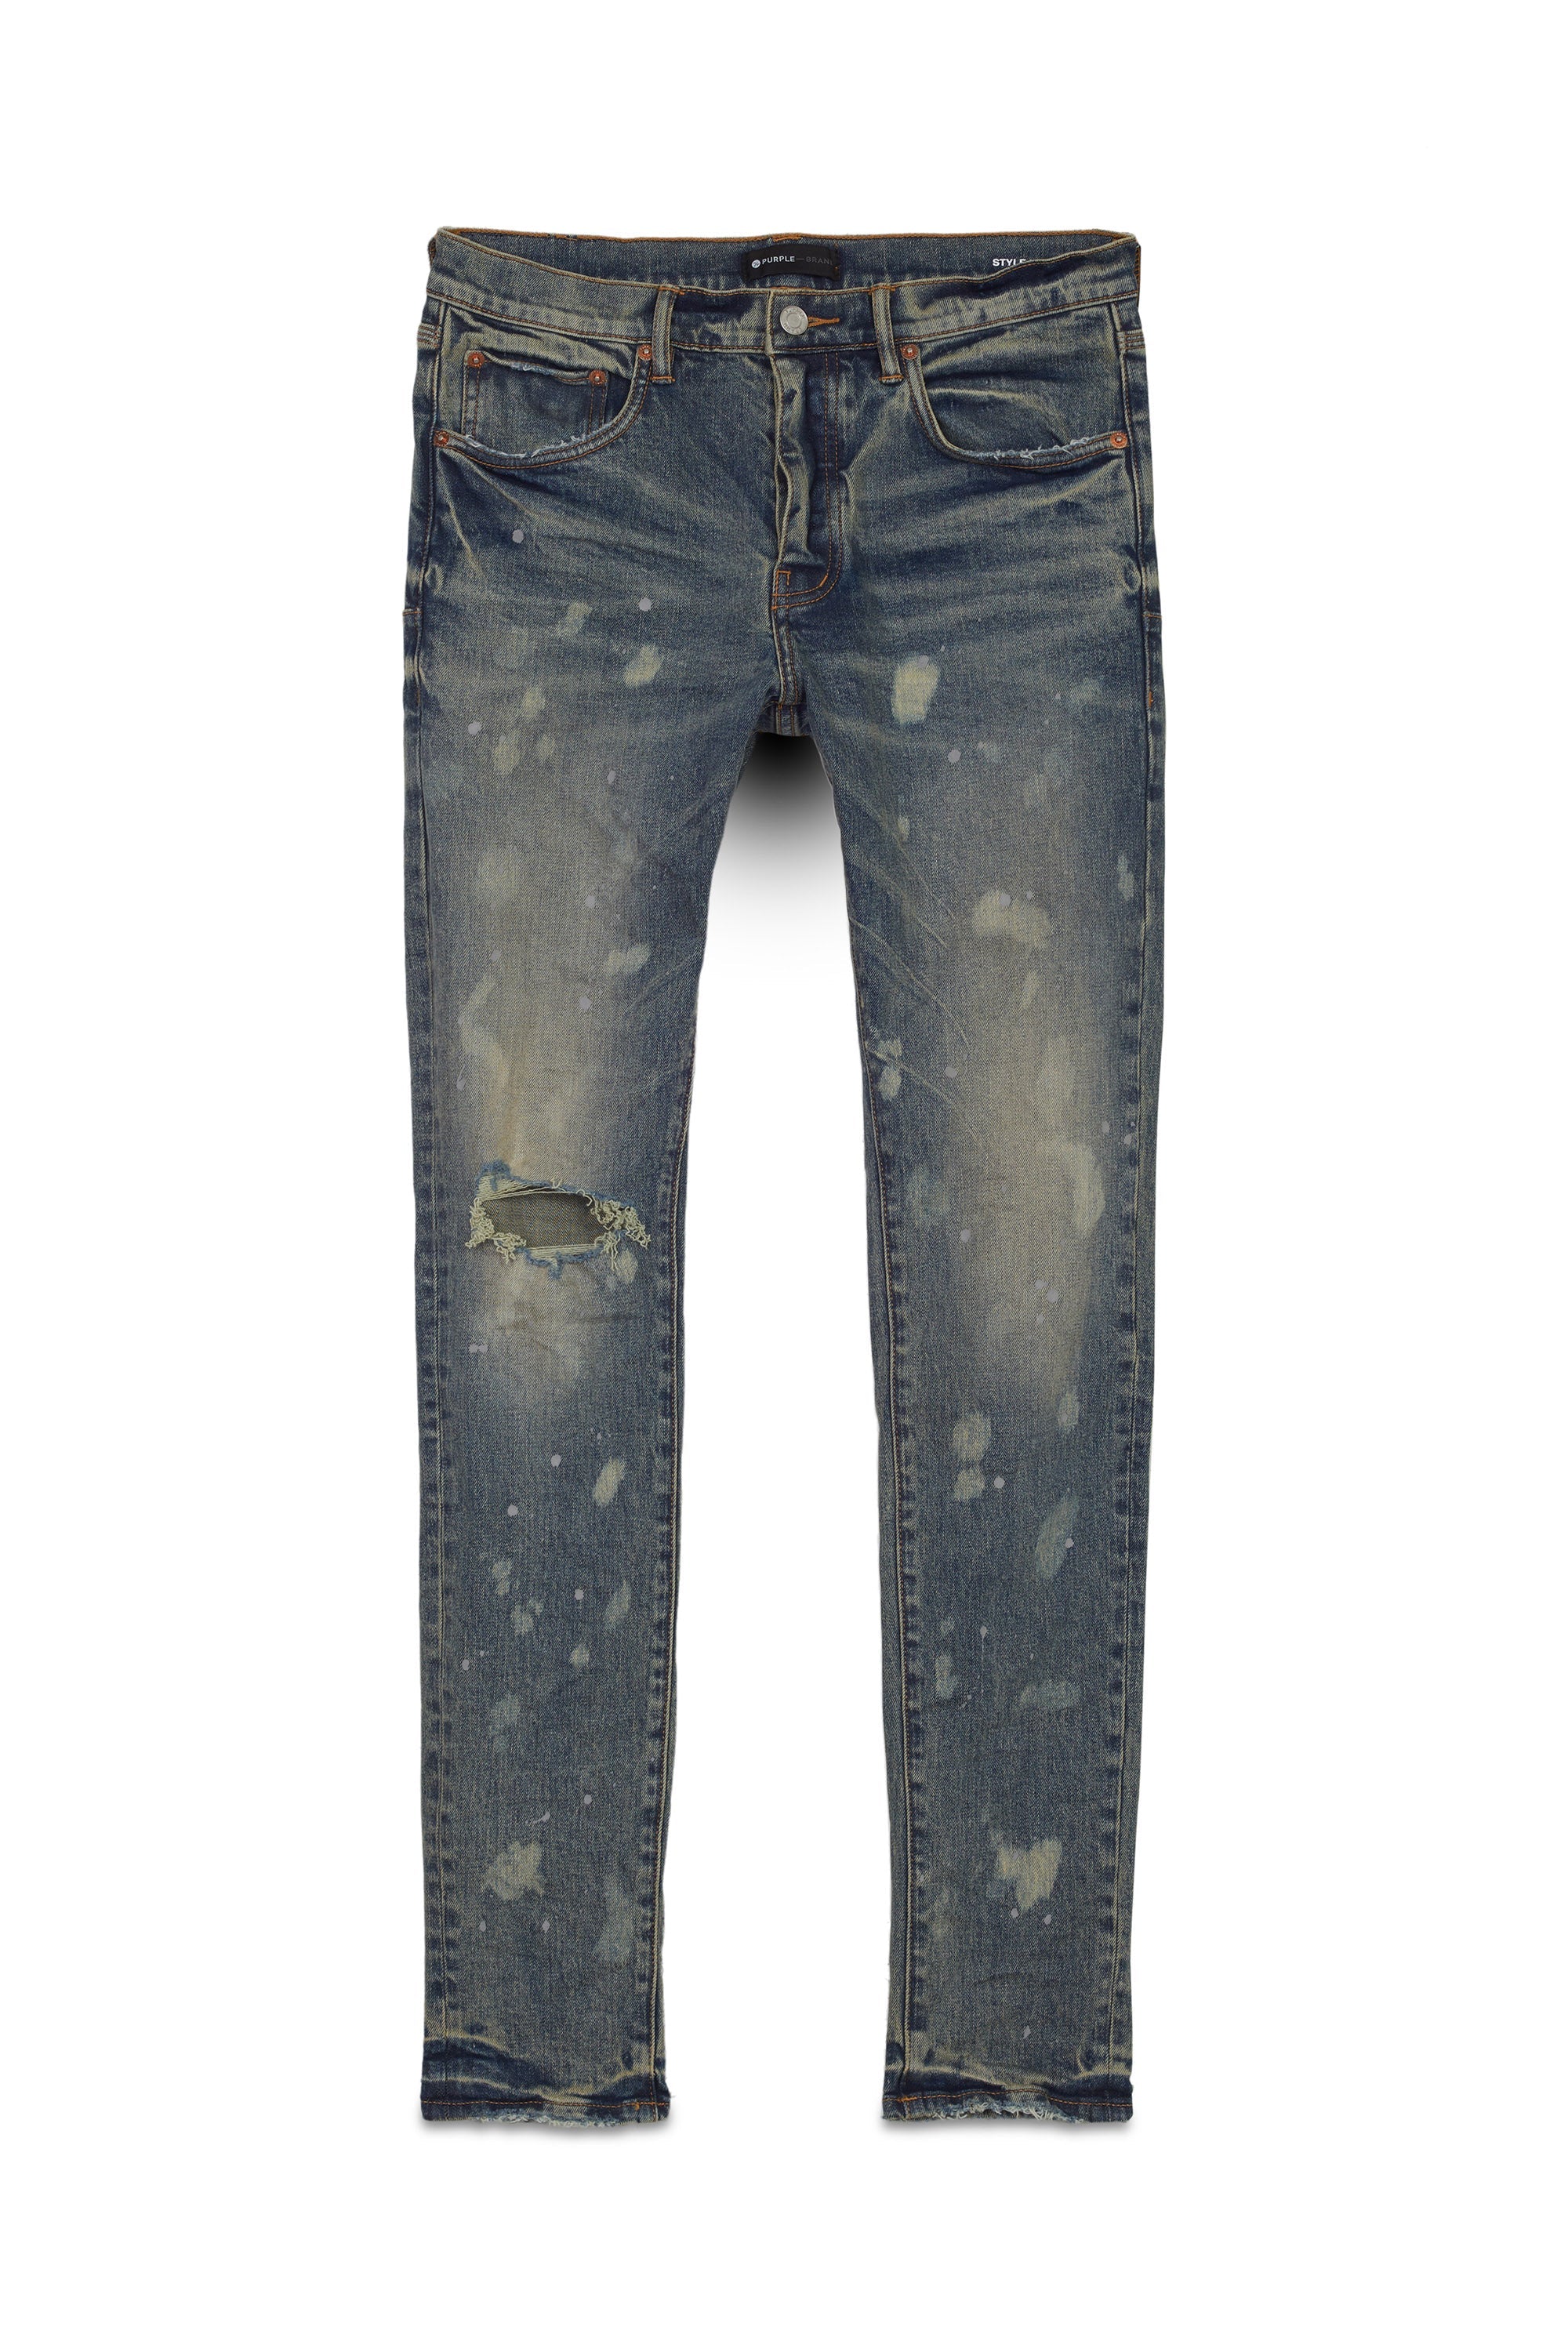 Purple Brand Skinny Jeans - Blue, 10.5 Rise Jeans, Clothing - WPBUR21263